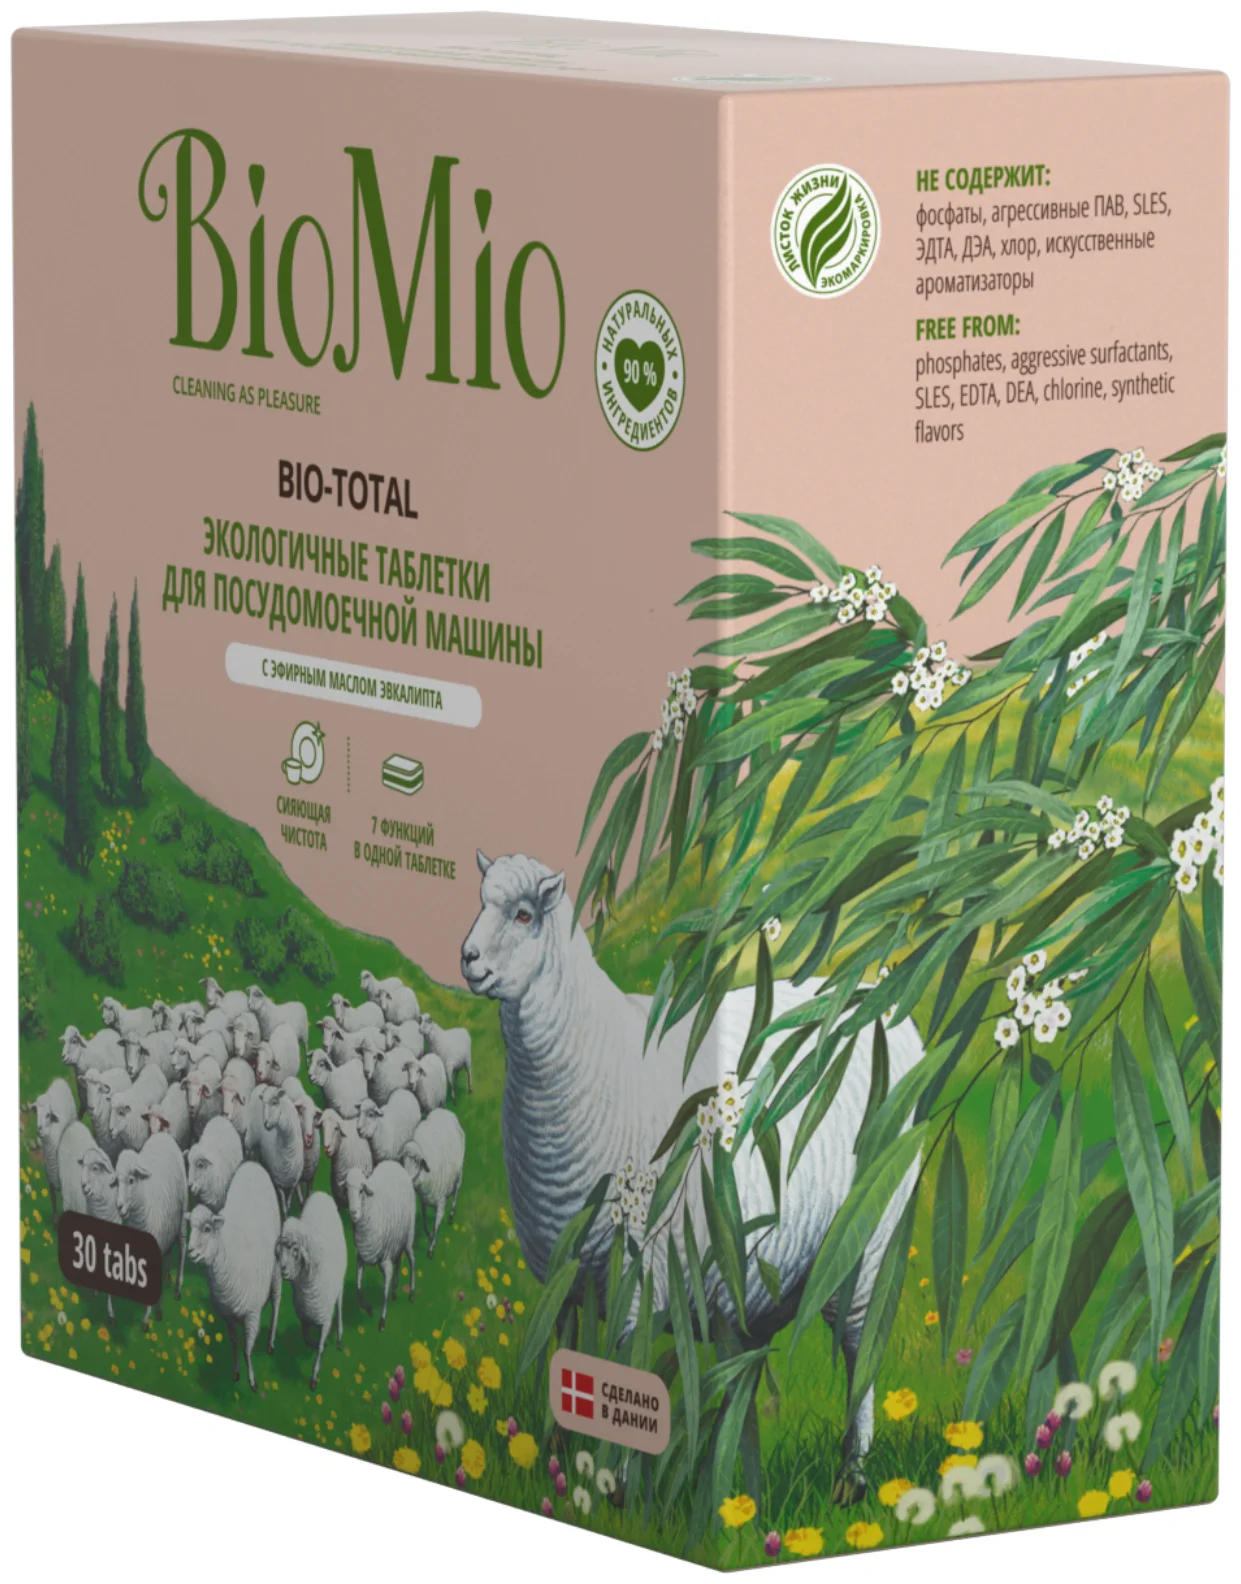 BioMio Bio-total - не содержит: фосфаты, хлор